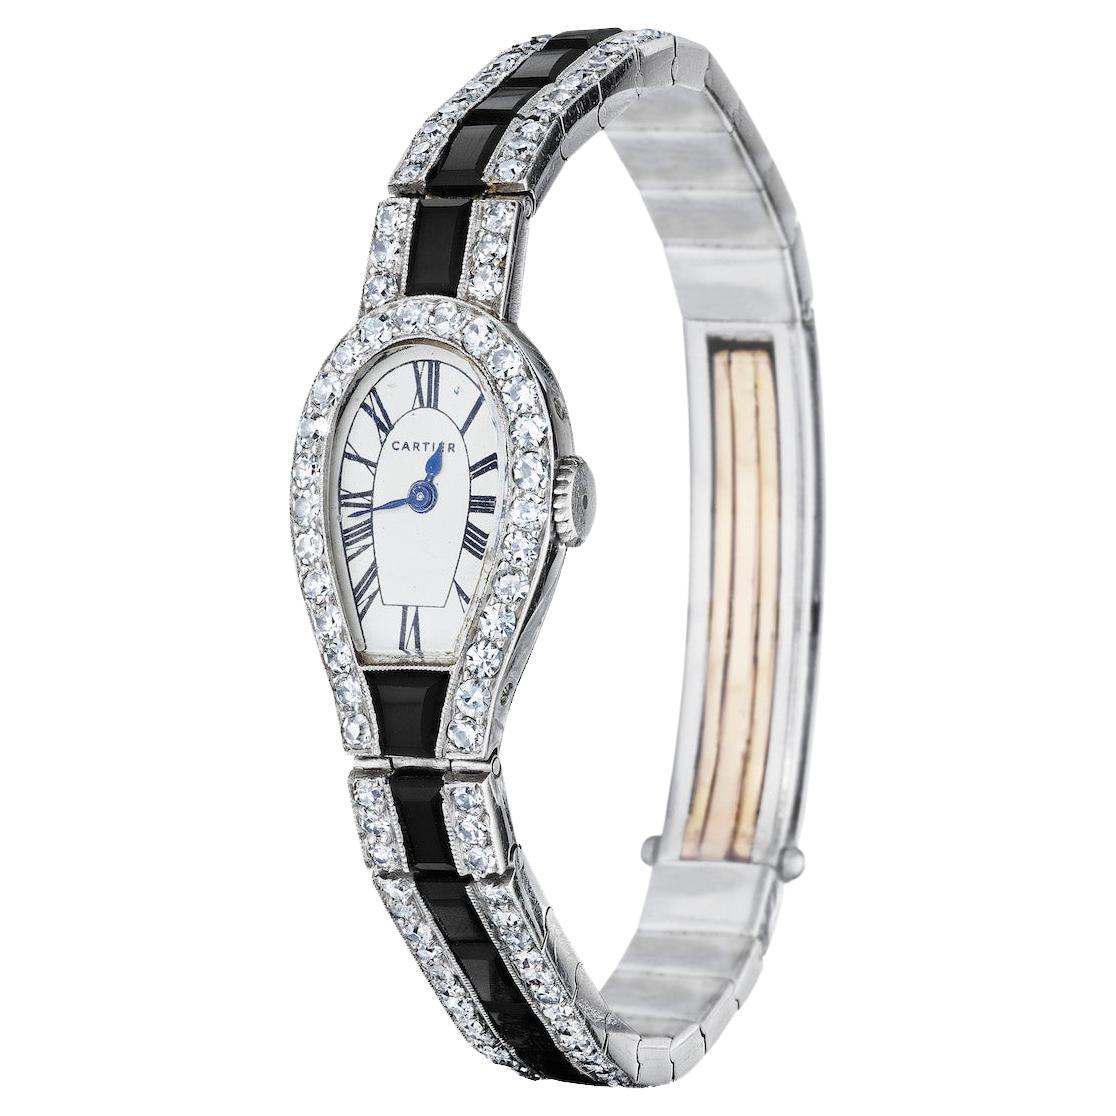 Cartier Diamond and Onyx Bracelet Watch C. 1925 Art Deco, Paris